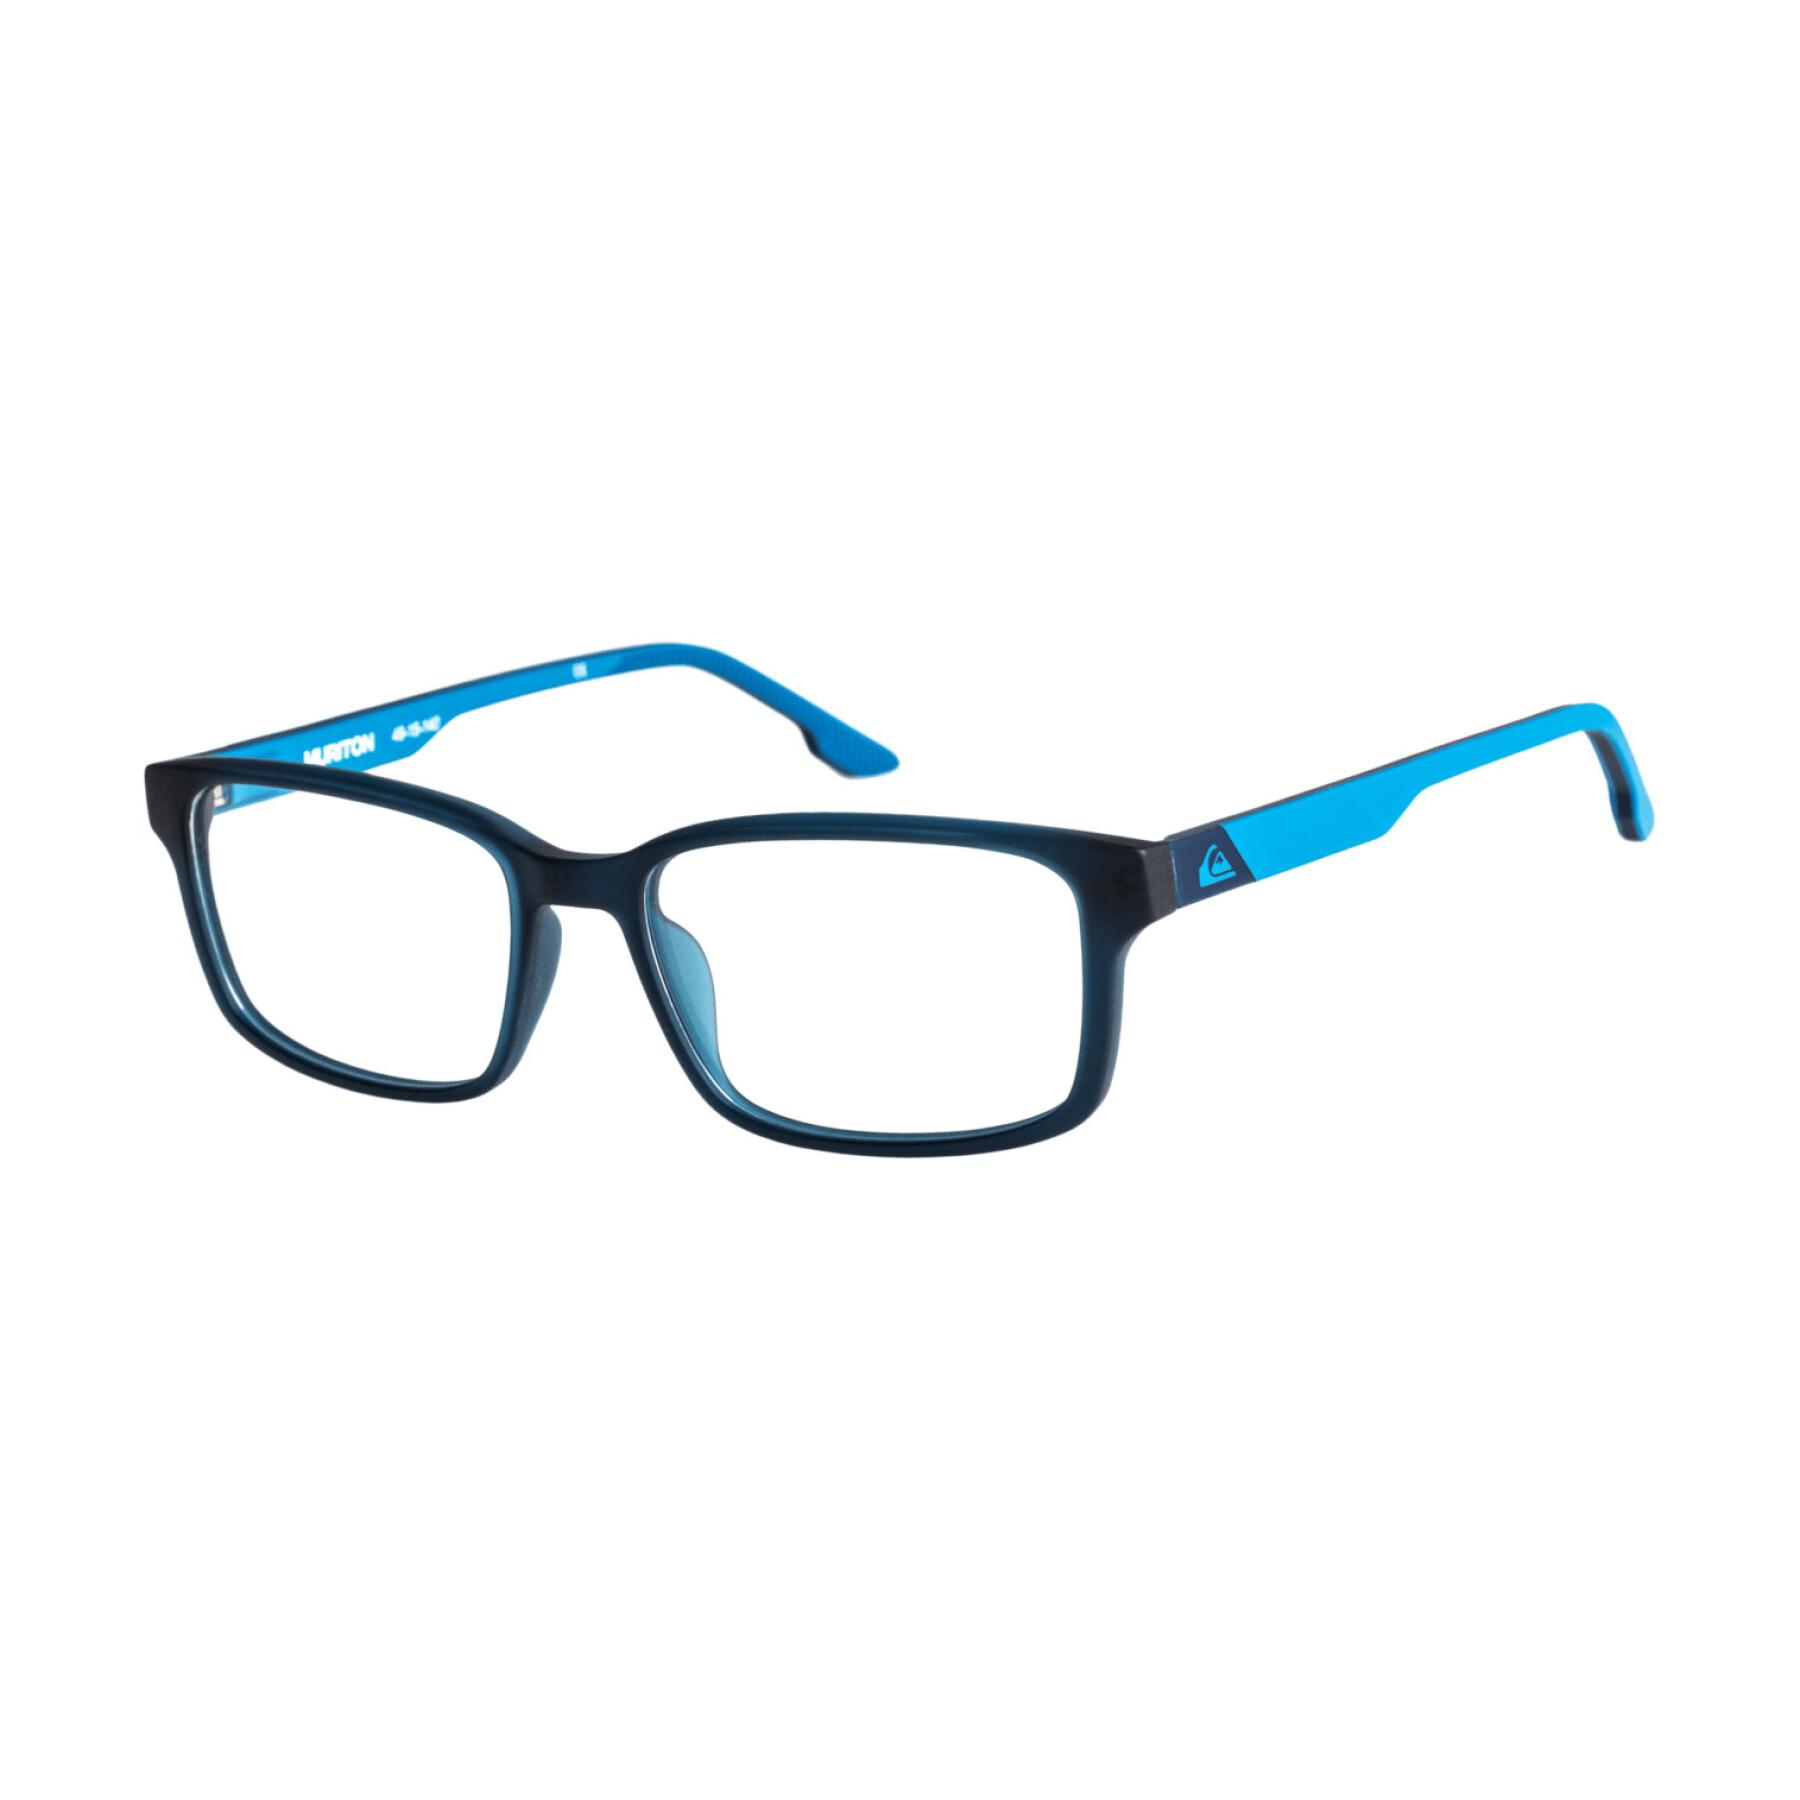 Eyeglasses Quiksilver Muriton - Fashion Accessories - Accessories